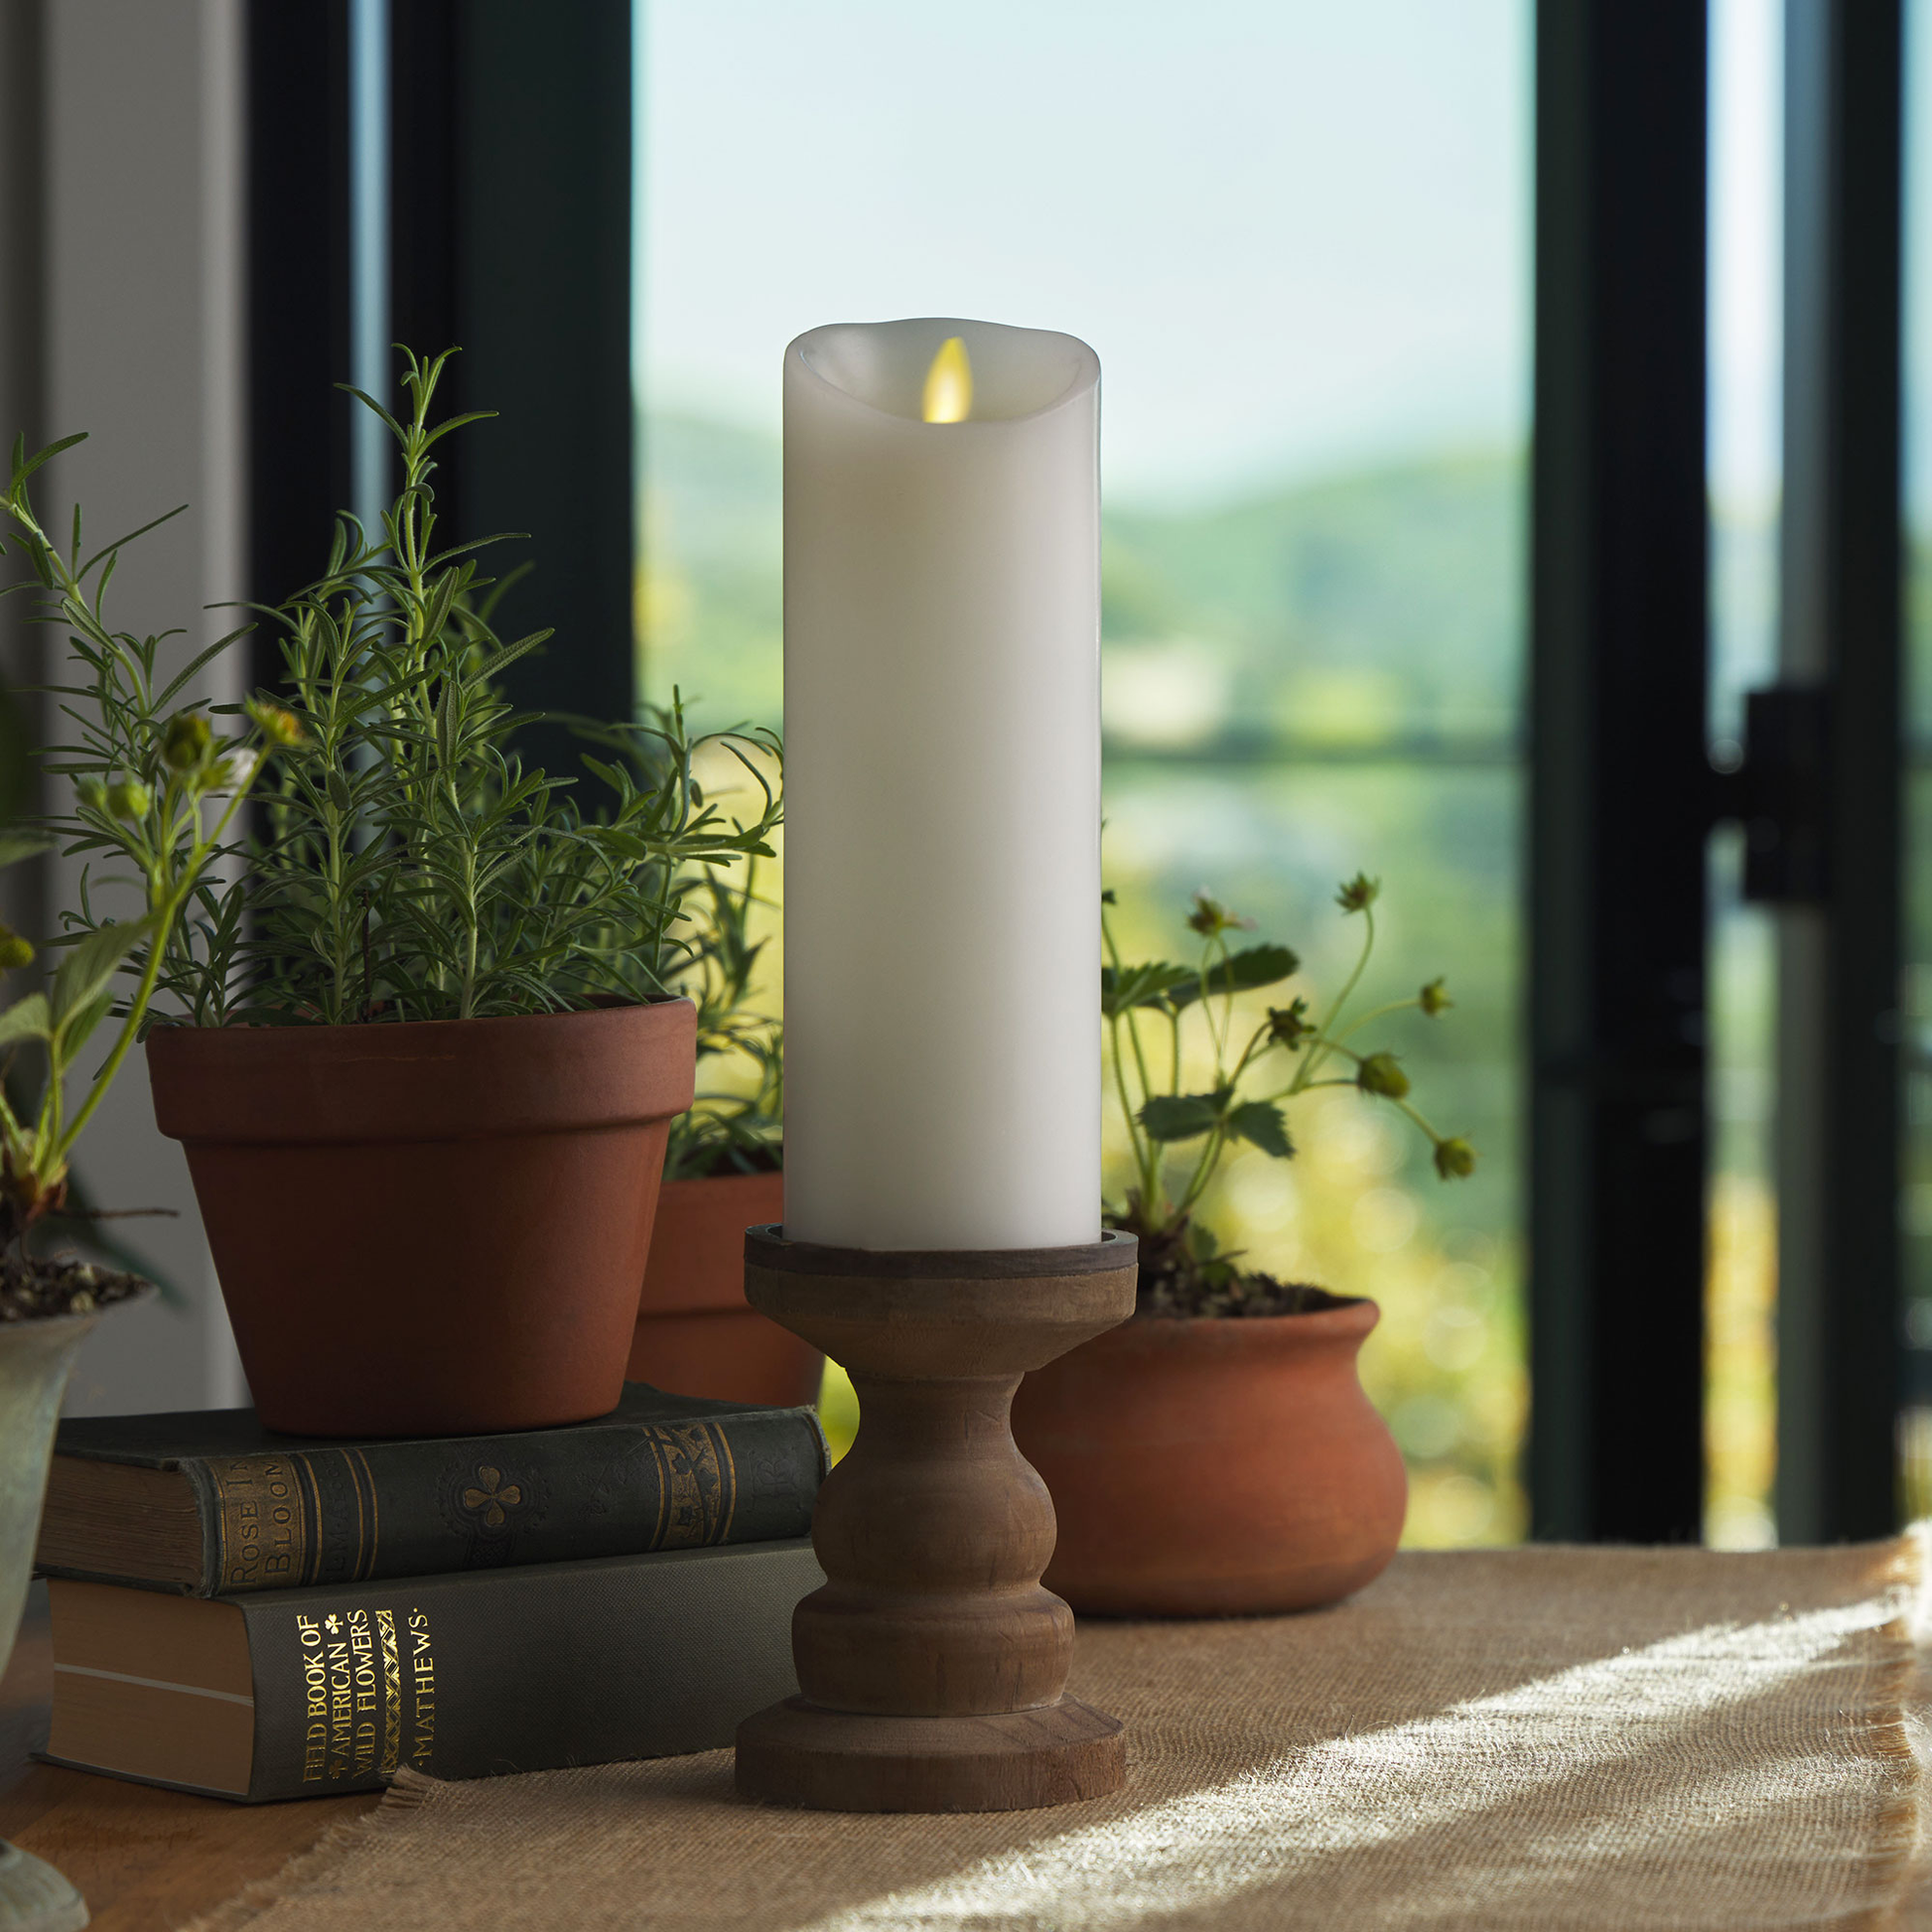 an image of Luminara's flameless white candles